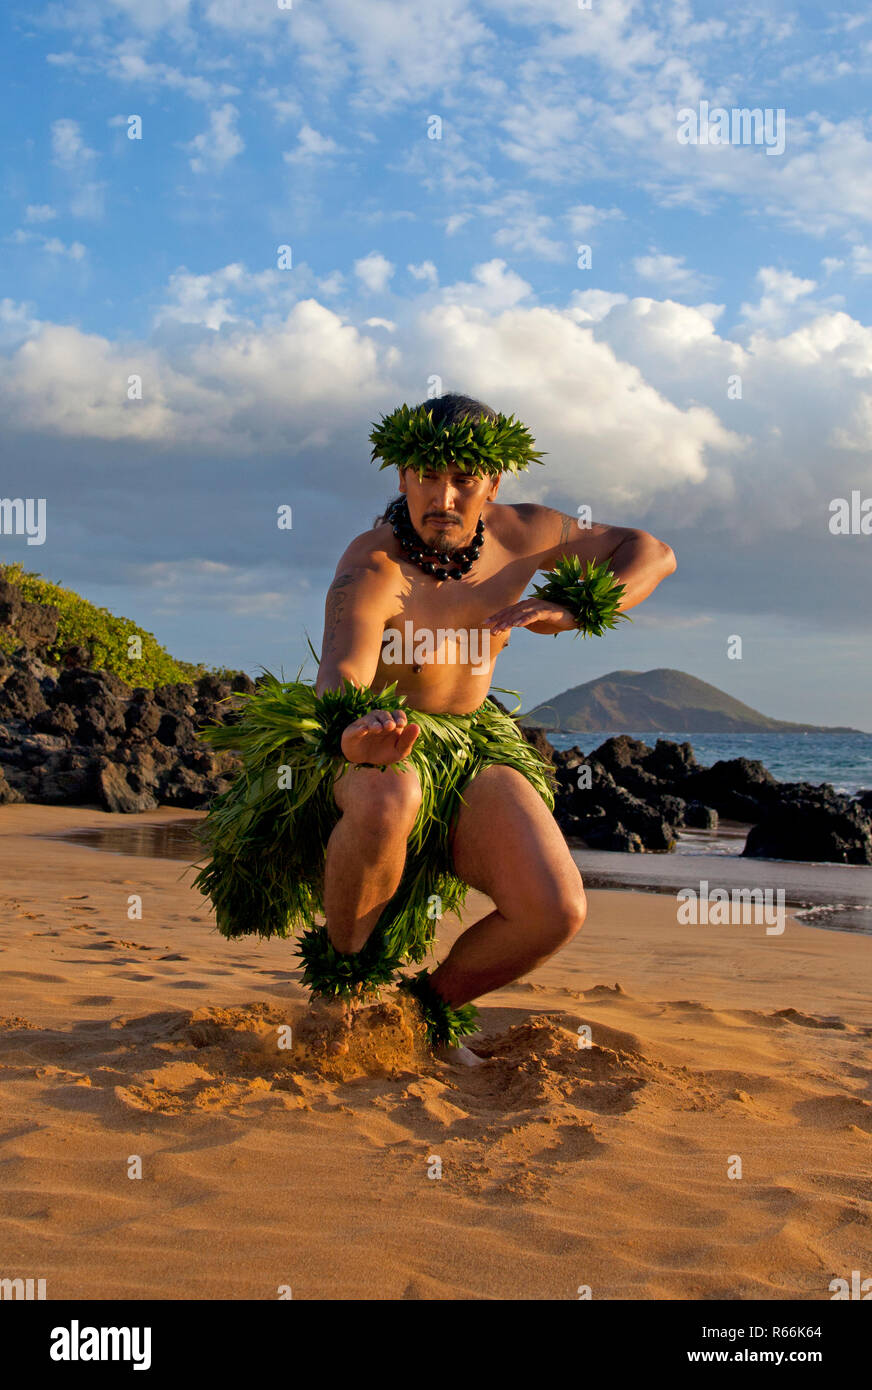 Hula dancer on the beach on Maui, Hawaii. Stock Photo